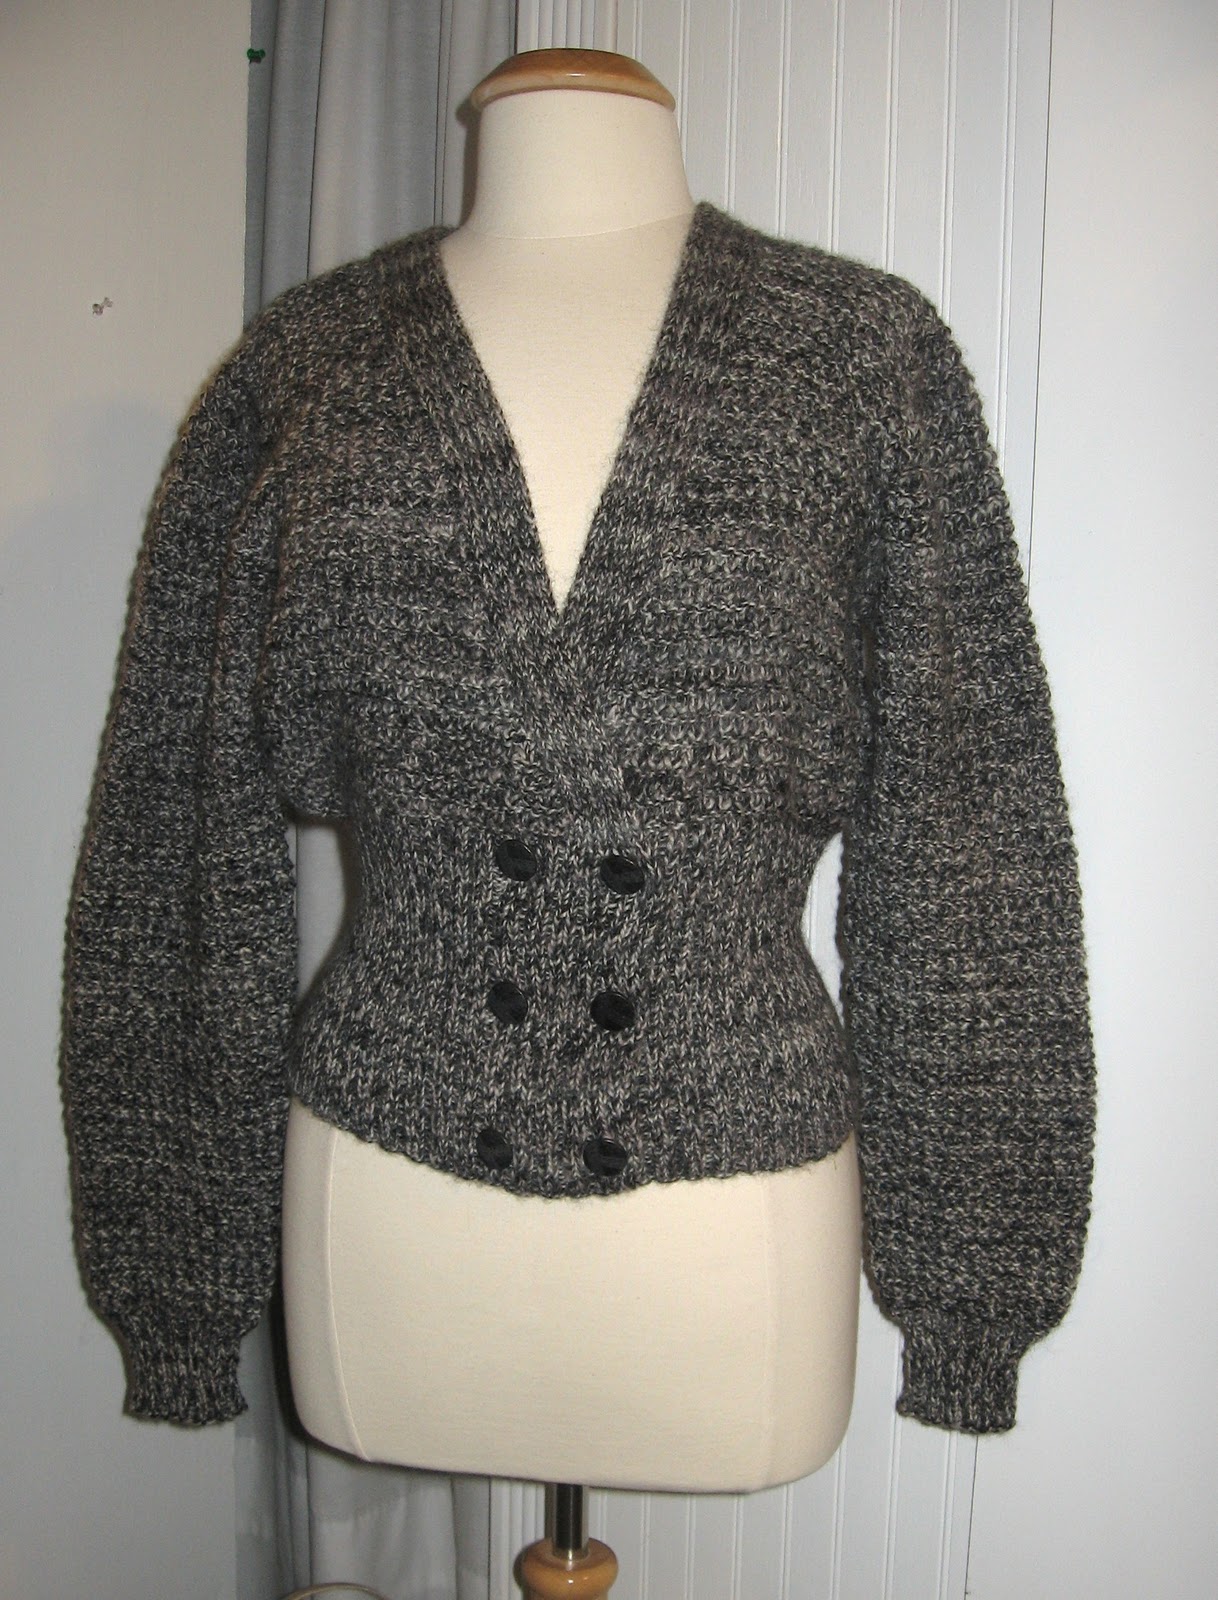 Nancy's Knitting: October 2010